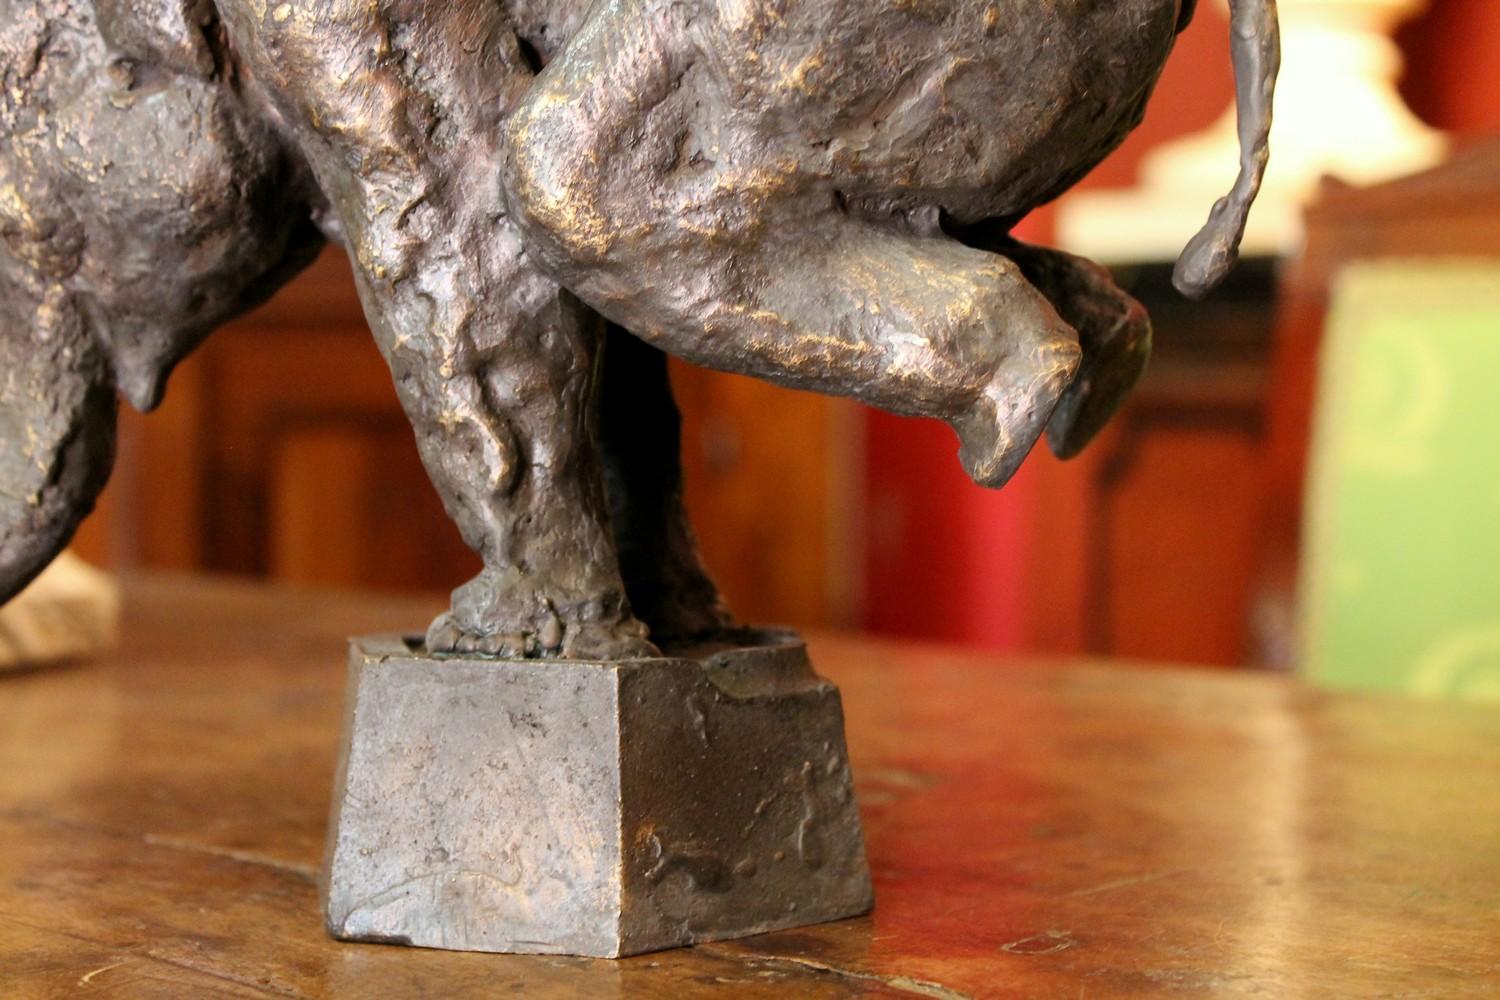 Elephant on Iron Pedestal, Lost Wax Casting Parcel-Gilt Patina Bronze Sculpture 8